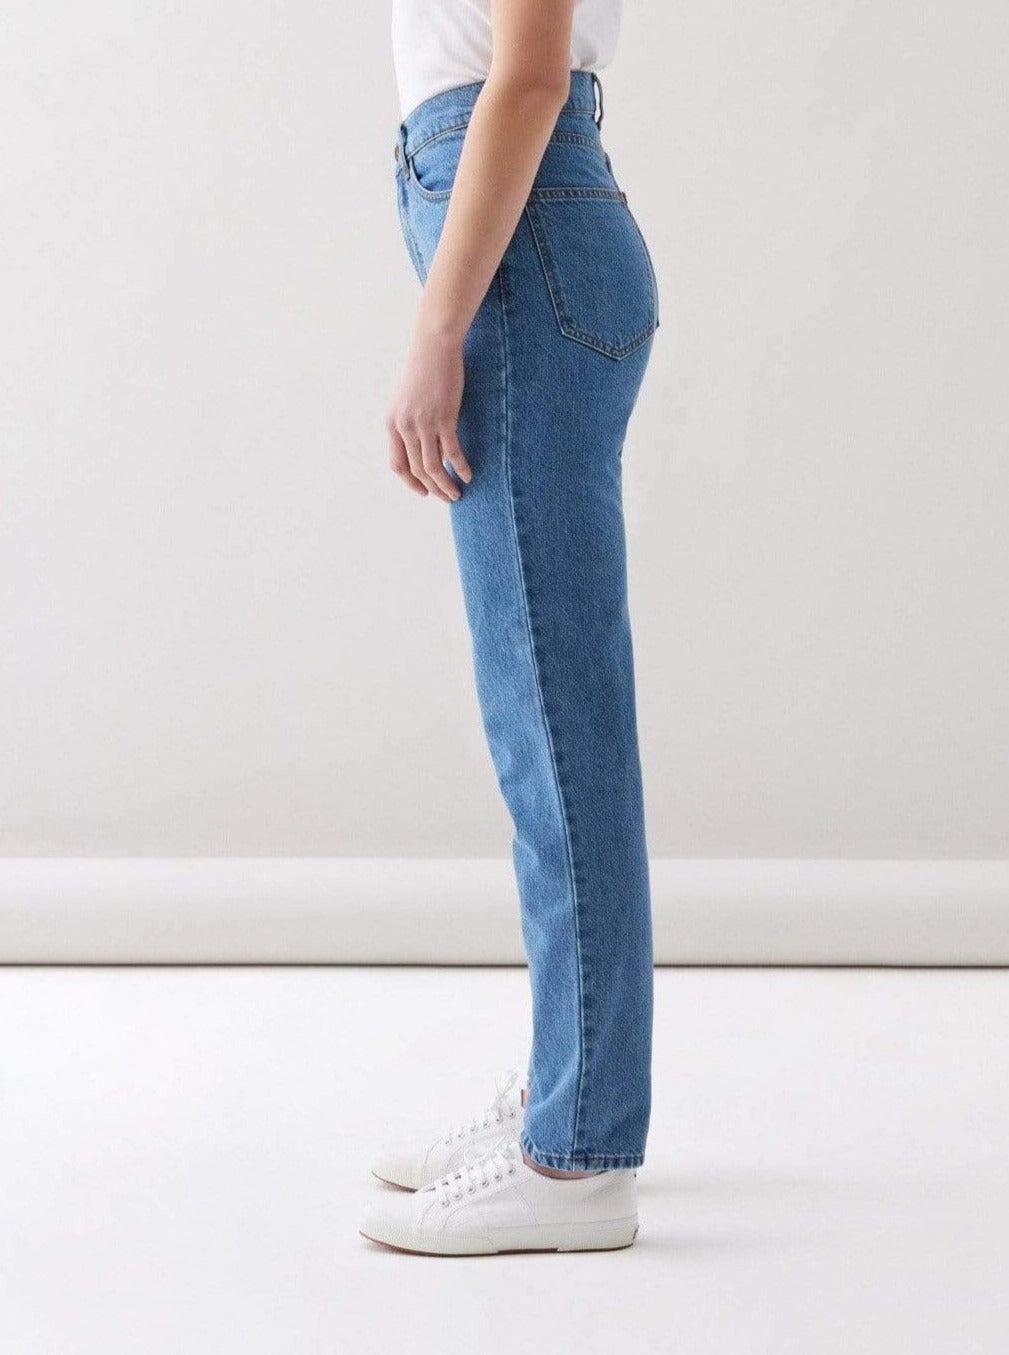 Par.co Jeans DENIM Dona Jeans Rosa Light Straight Jeans moda sostenible moda ètica